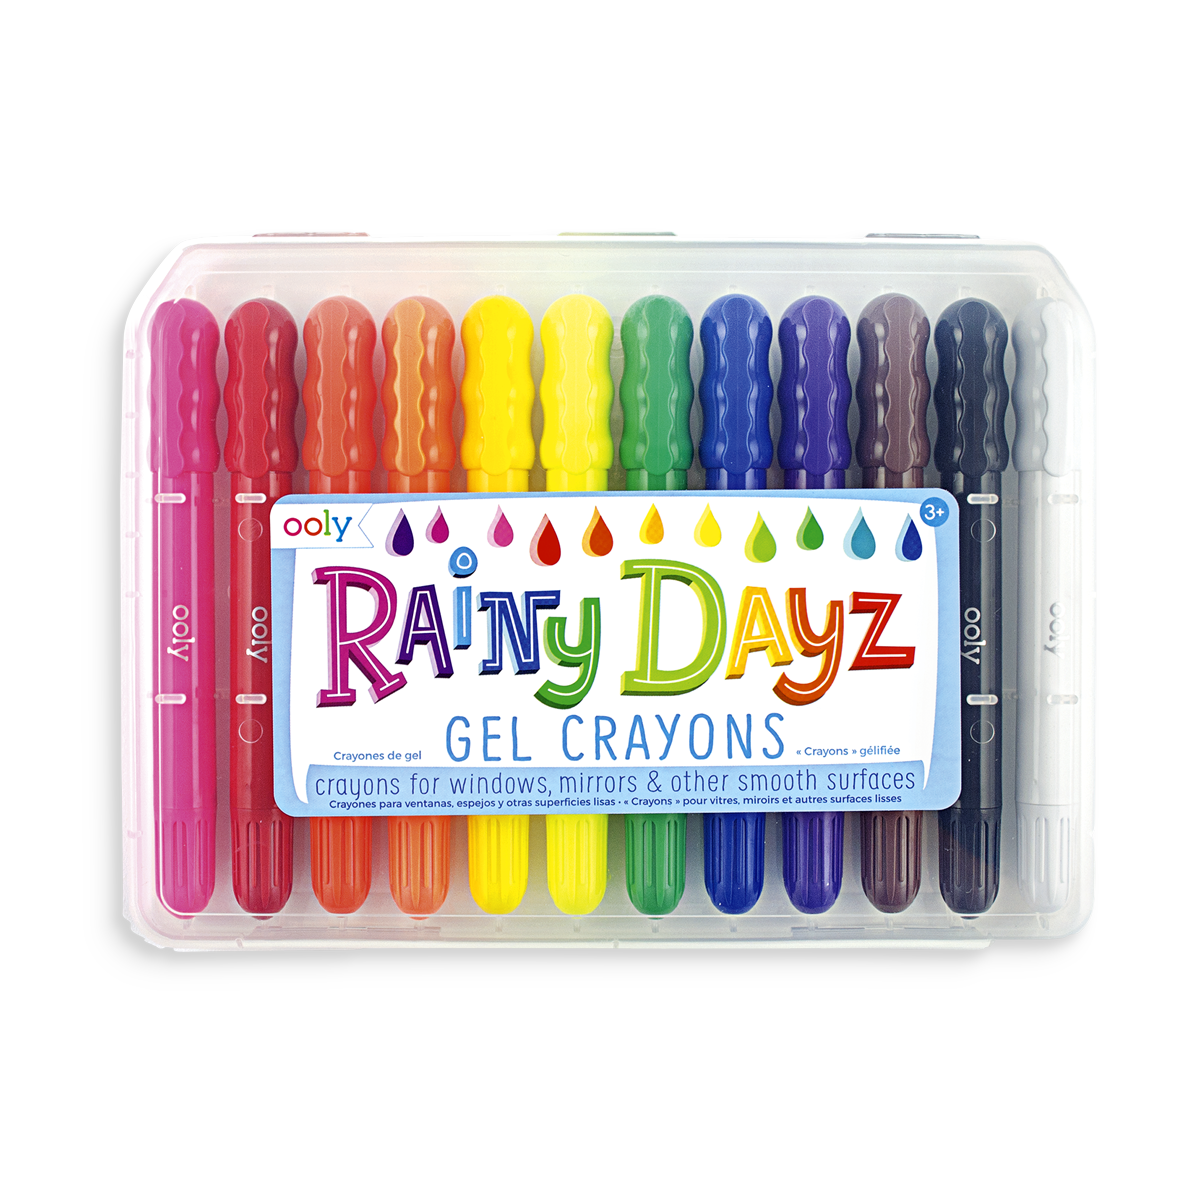 Mr. Pen Gel Crayons Review 